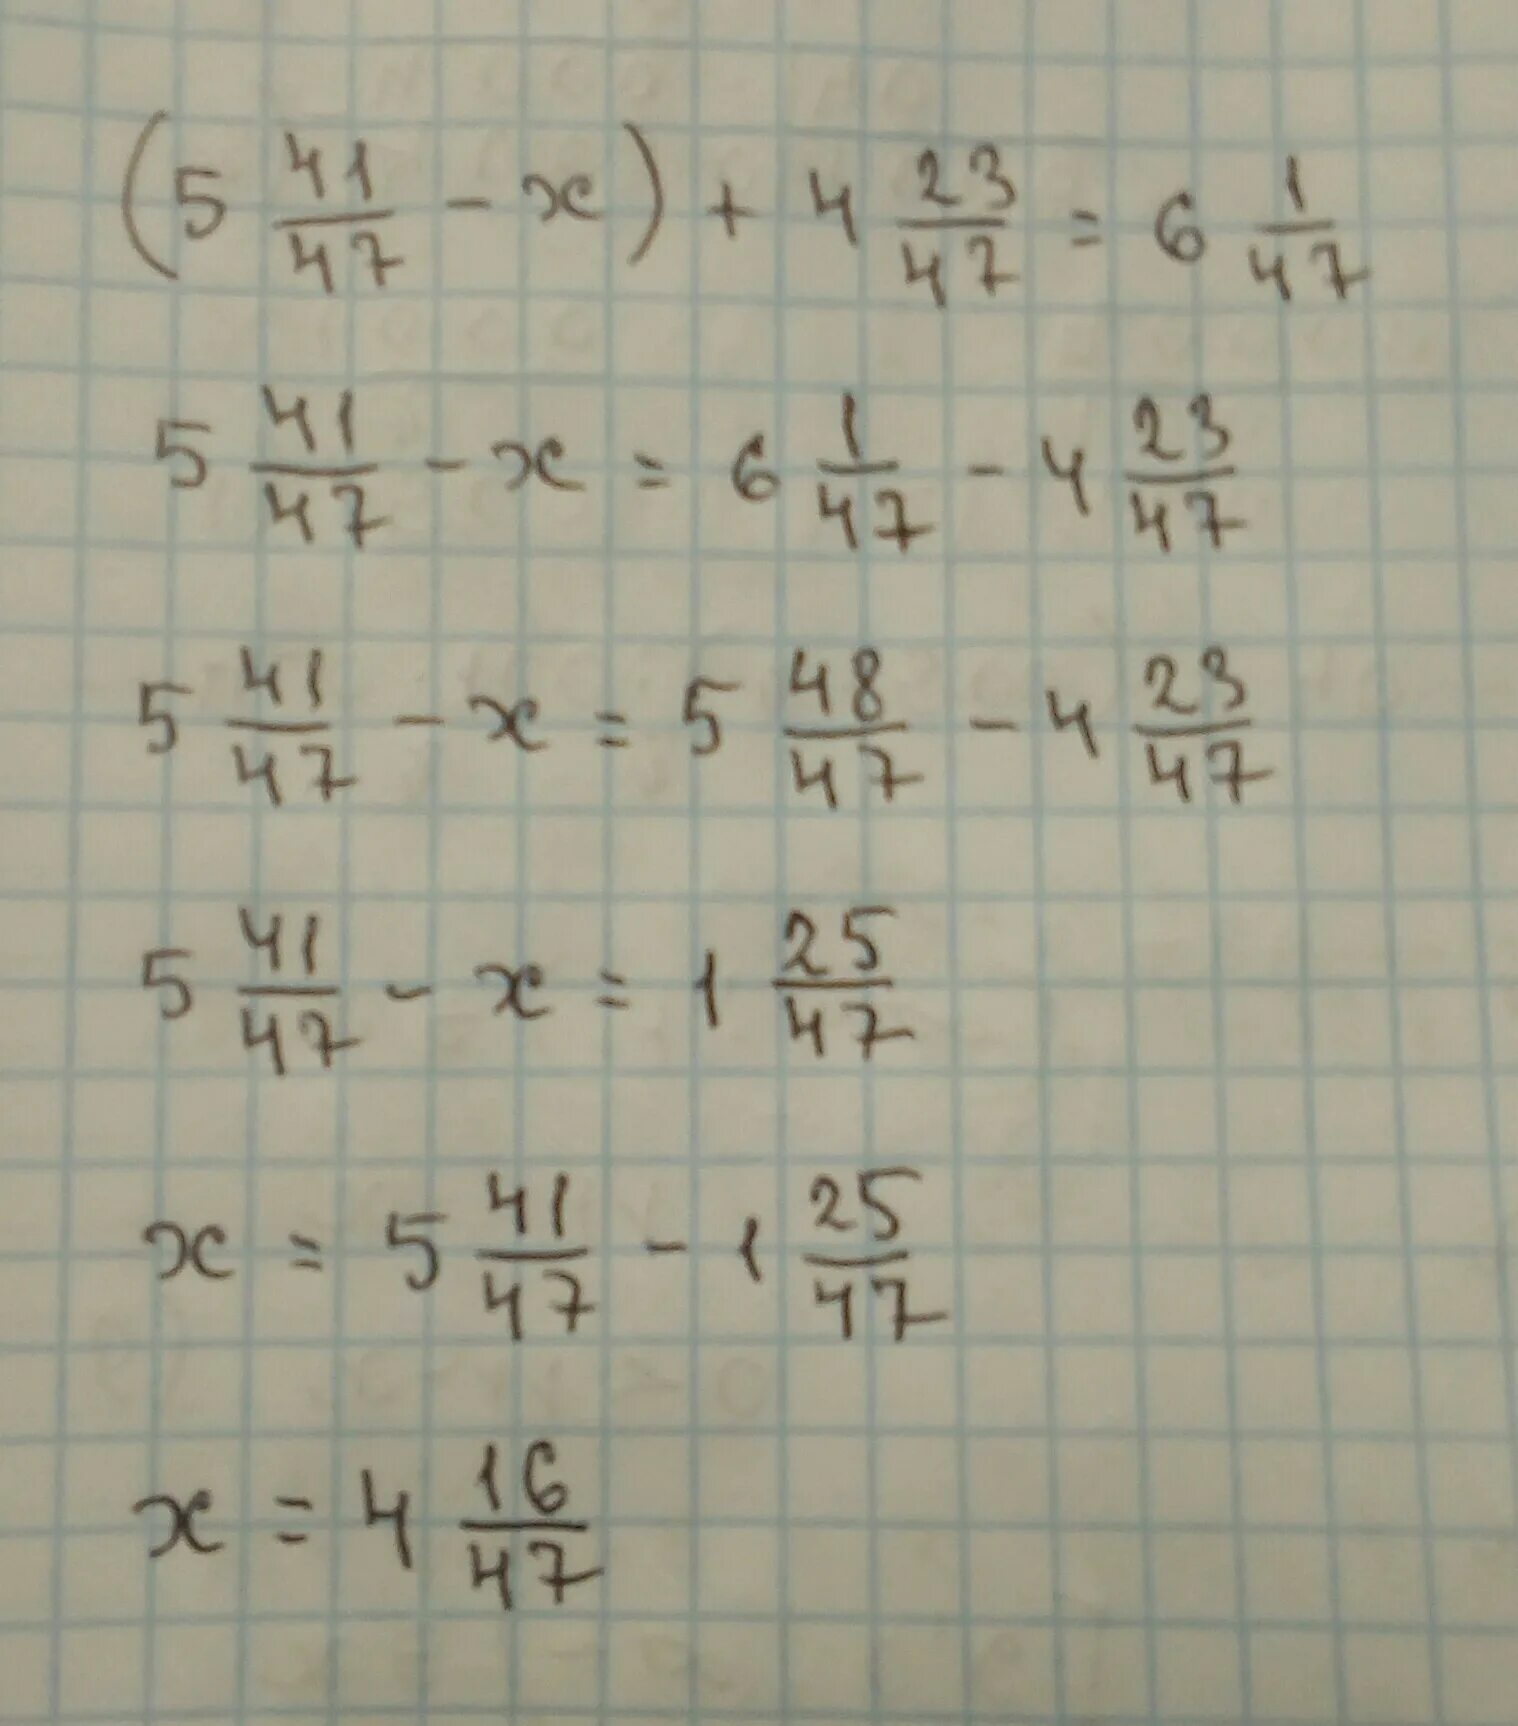 1 4x 21. 5 44/47-Х +4 23/47 6 1/47. 4,2:1,47 Решение. Пример 47 6. -47x=1.